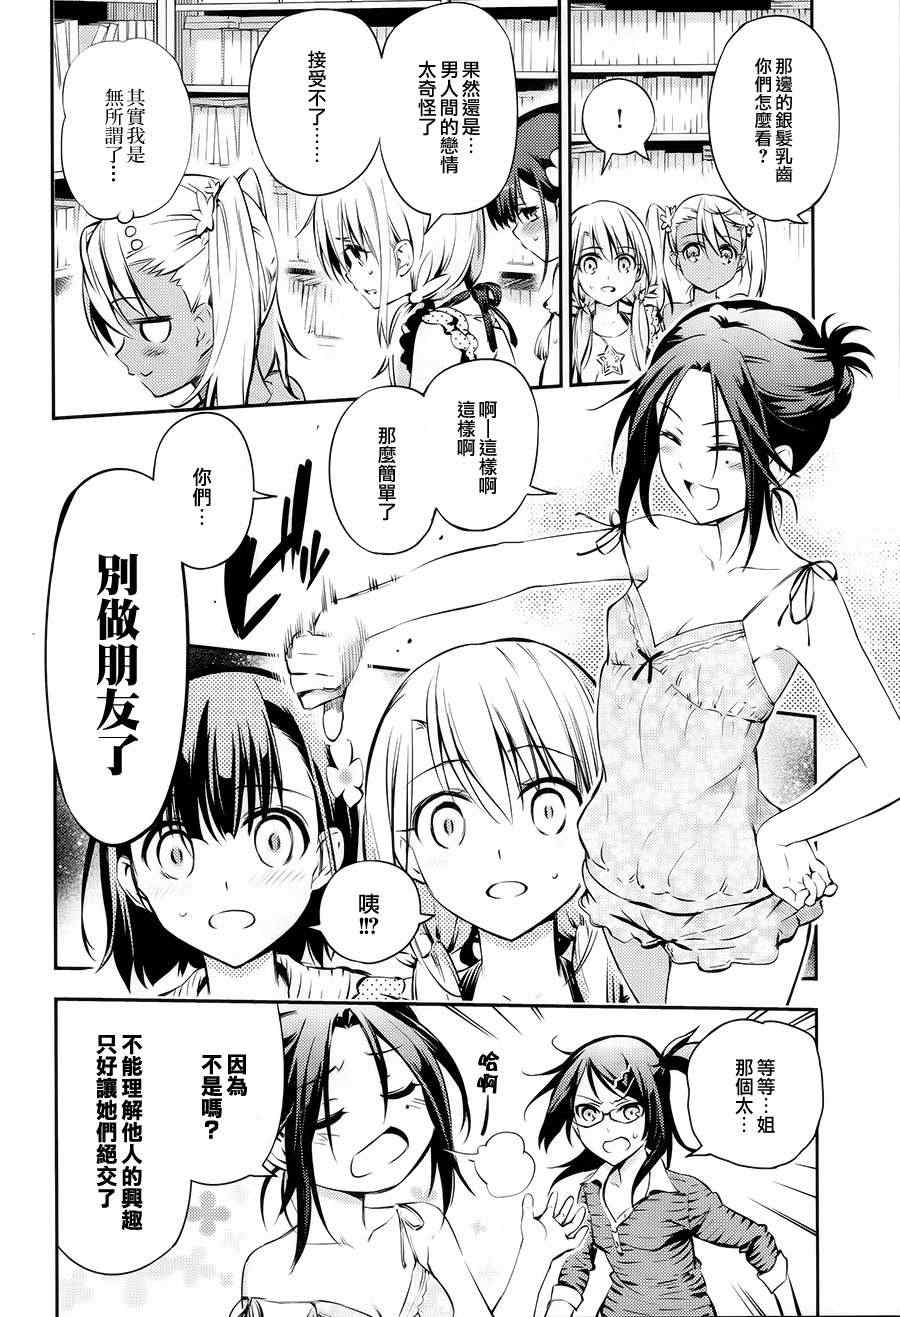 《Fate kaleid liner 魔法少女☆伊莉雅》漫画 Fate kaleid liner 番外篇